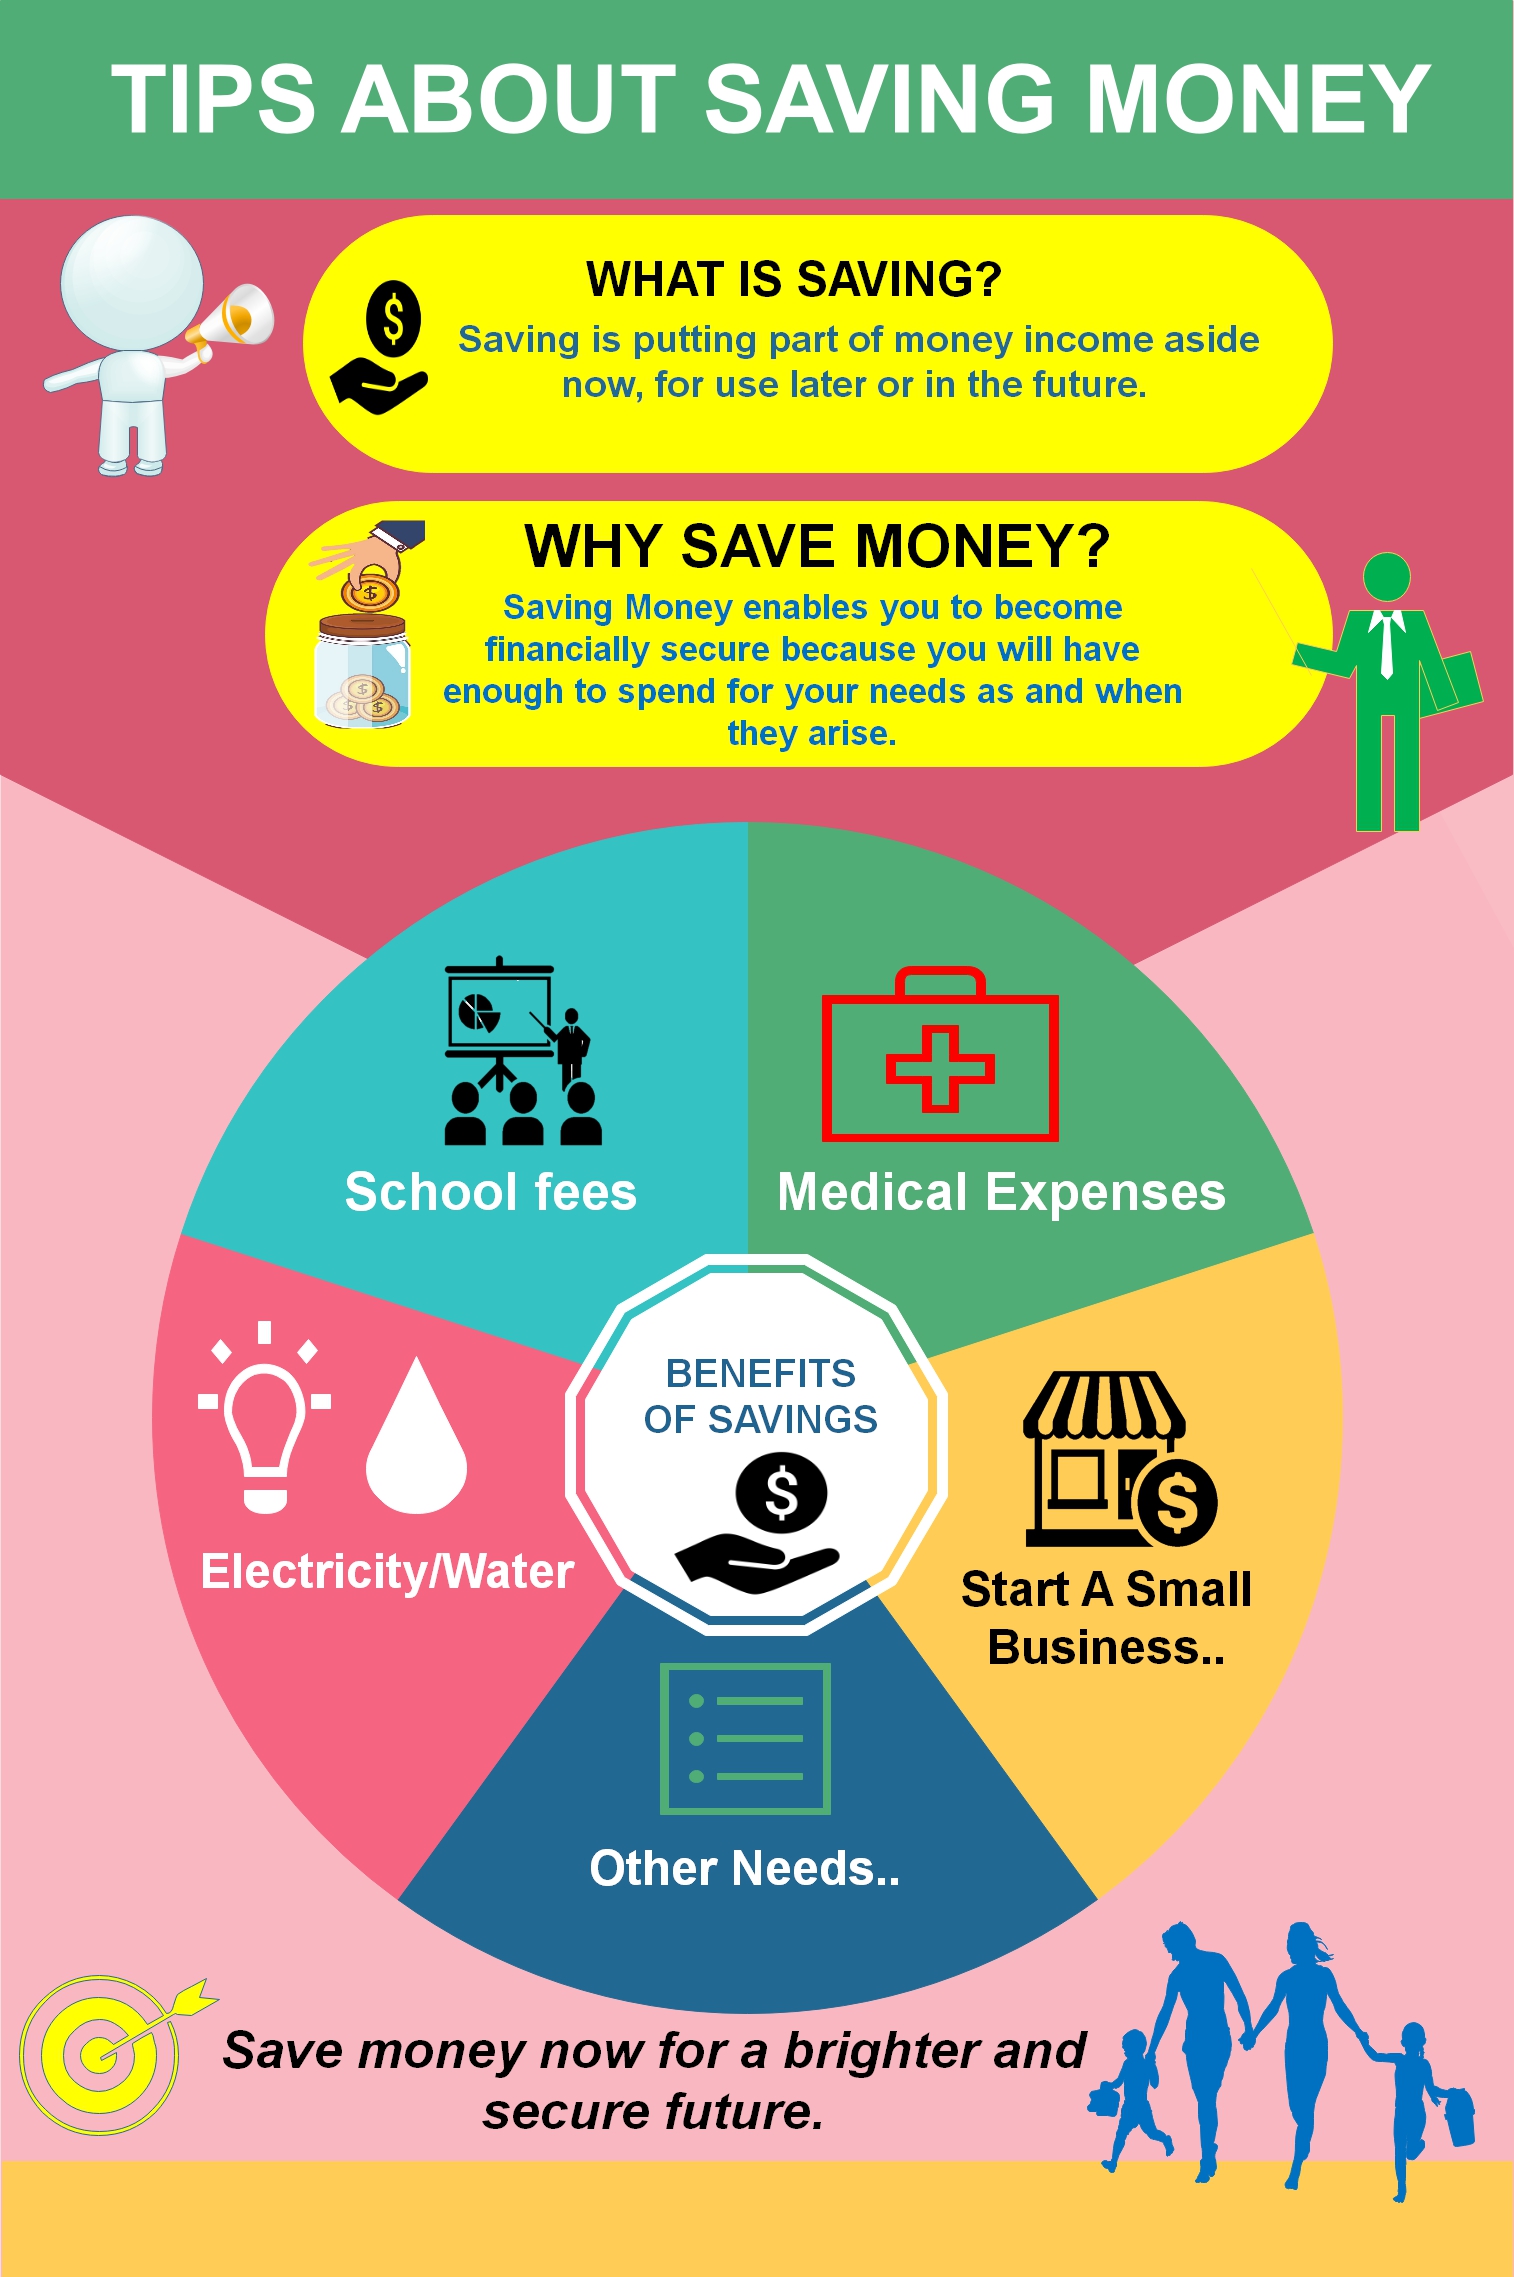 Tips for Saving Money - Central Bank of Solomon Islands